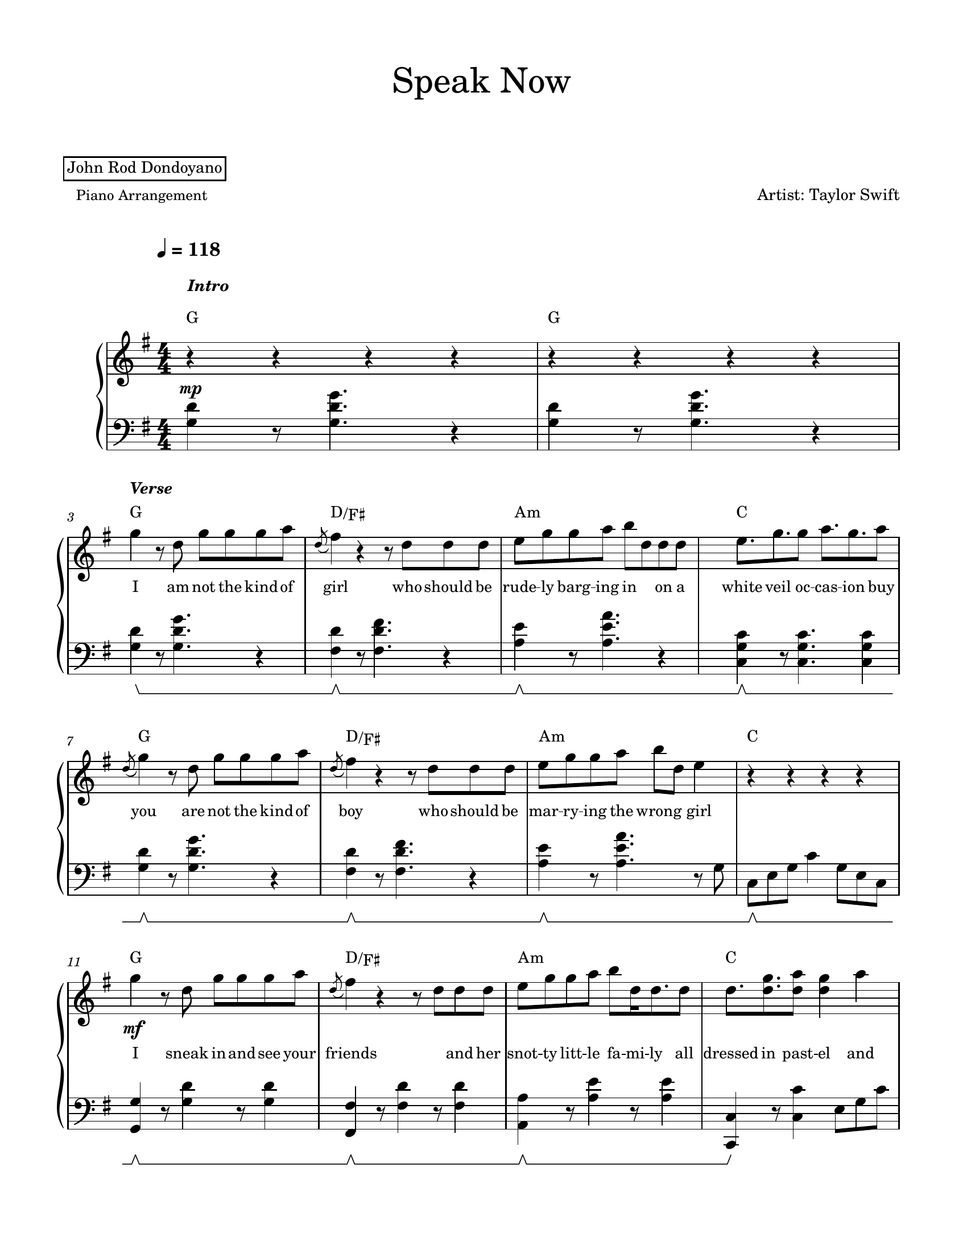 Taylor Swift - Speak Now (PIANO SHEET) by John Rod Dondoyano